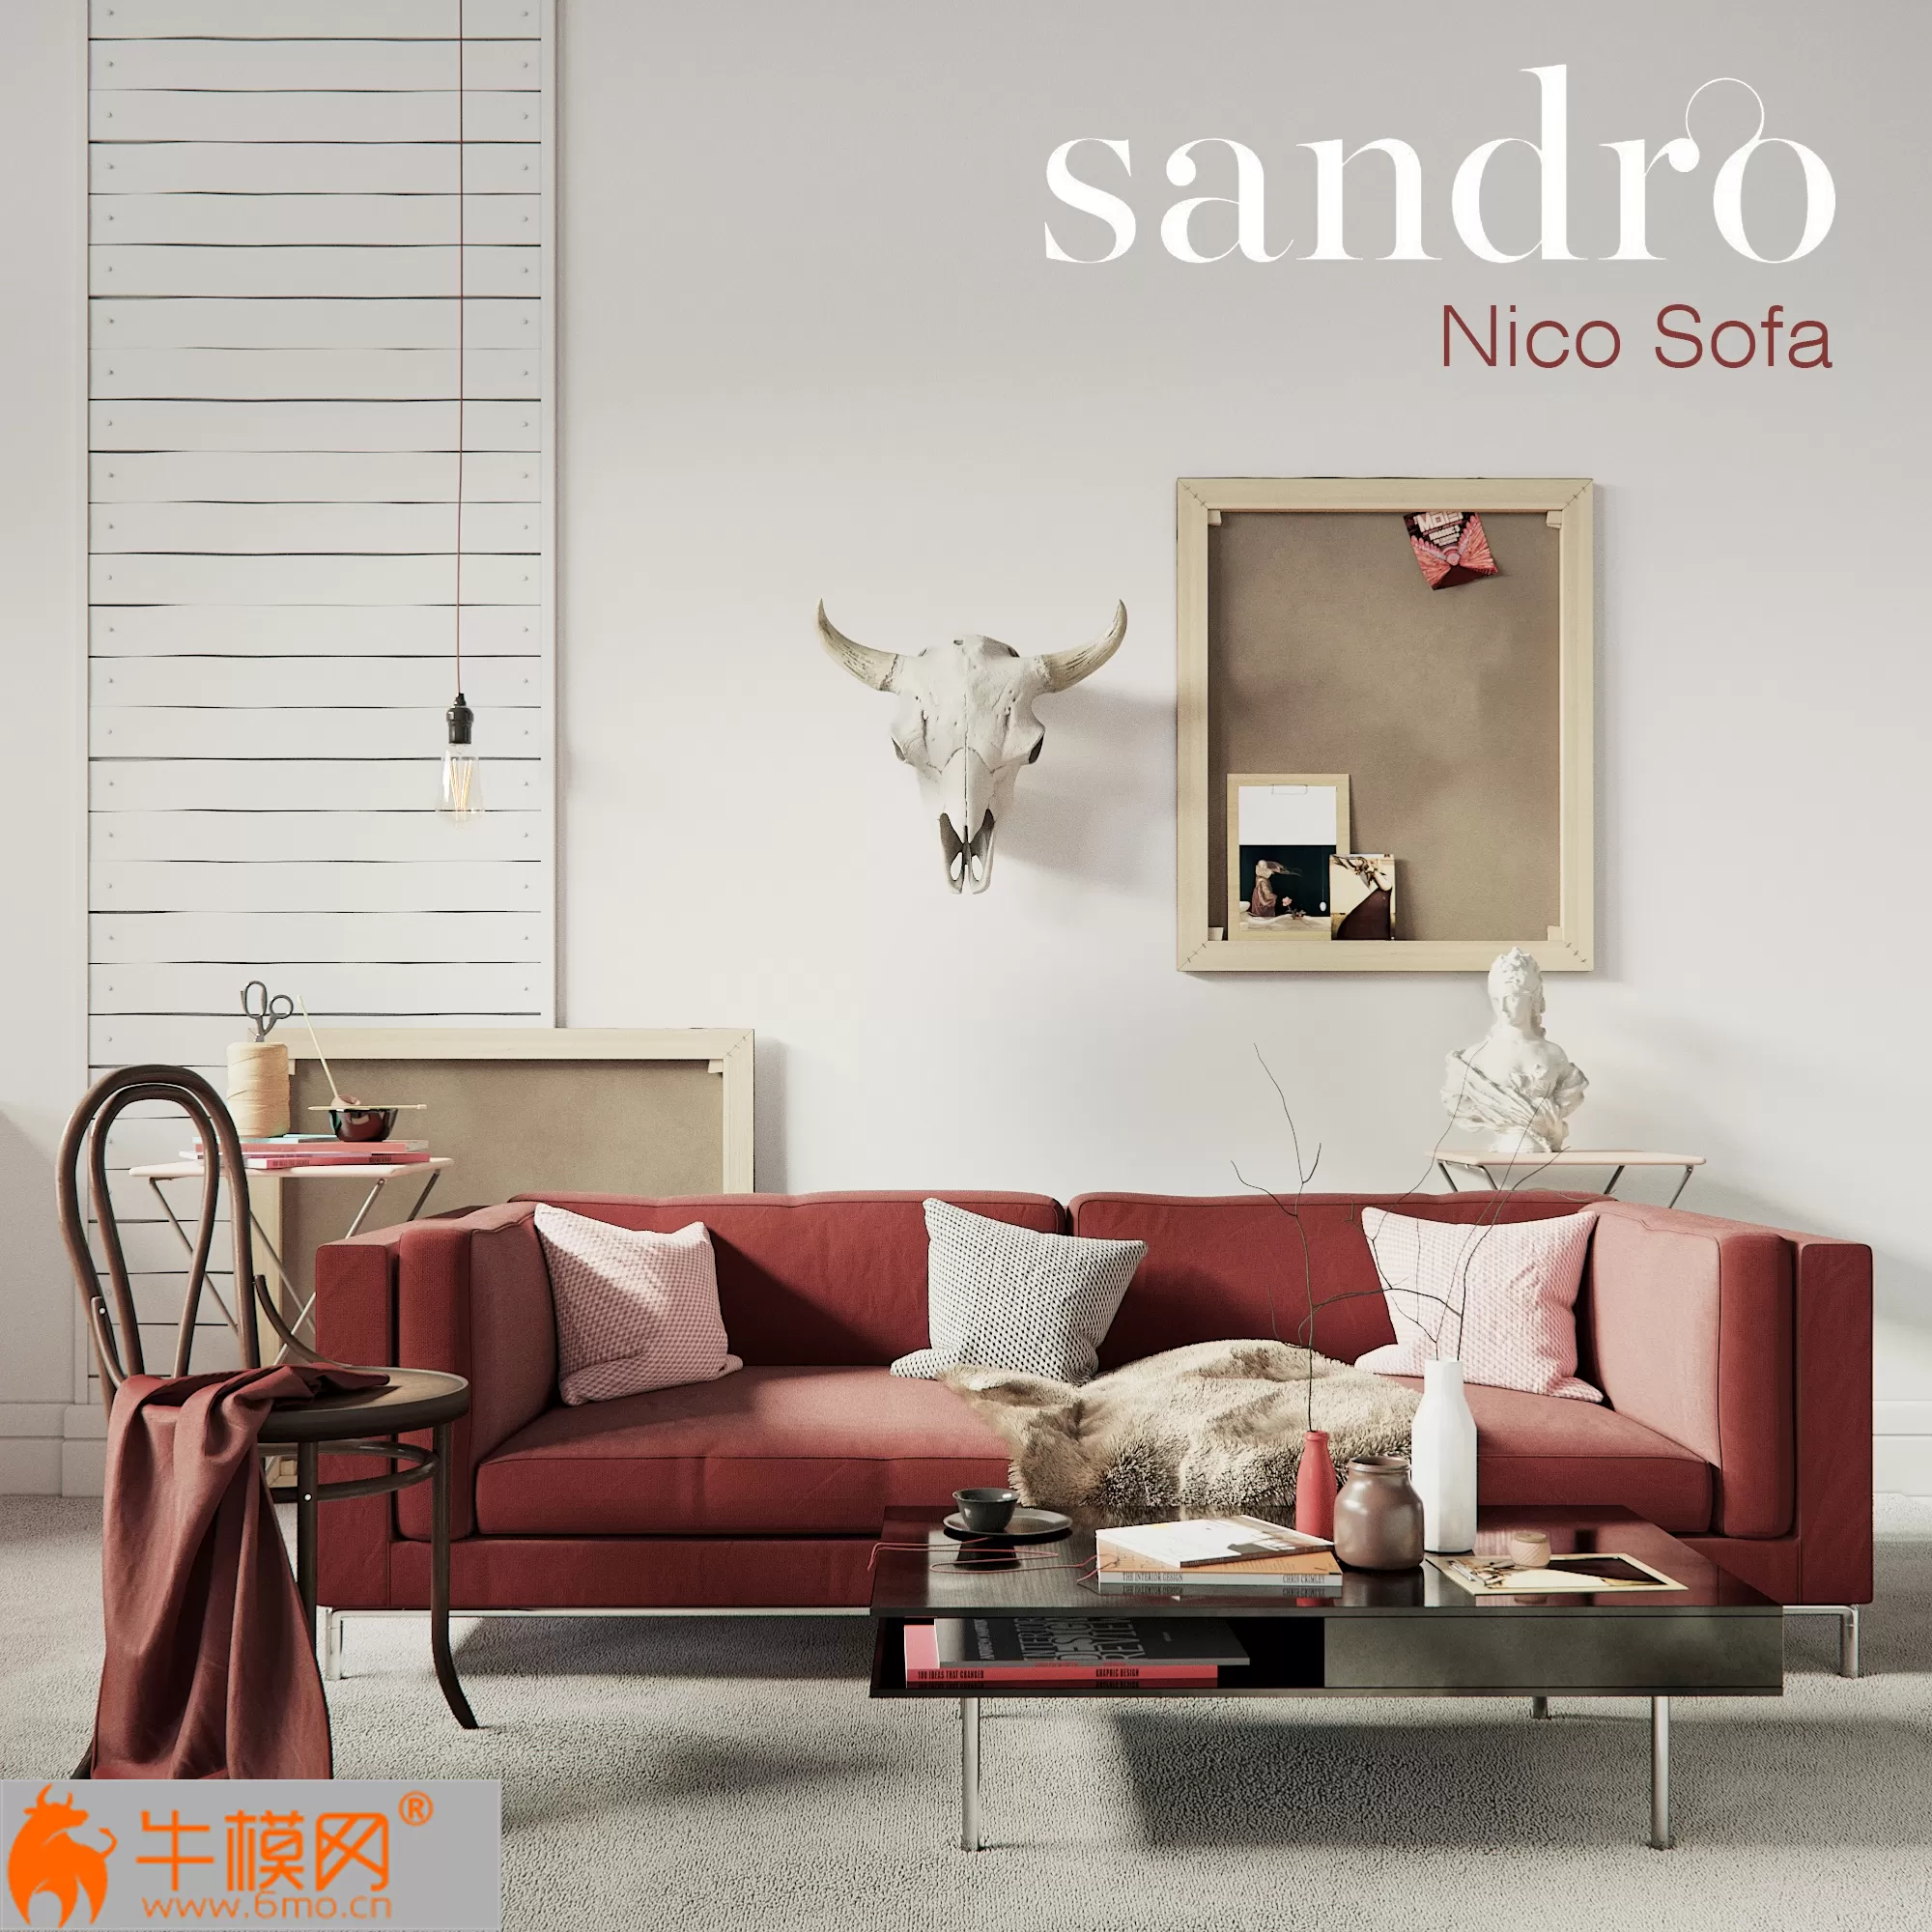 SANDRO Nico Sofa Claret set – 6083